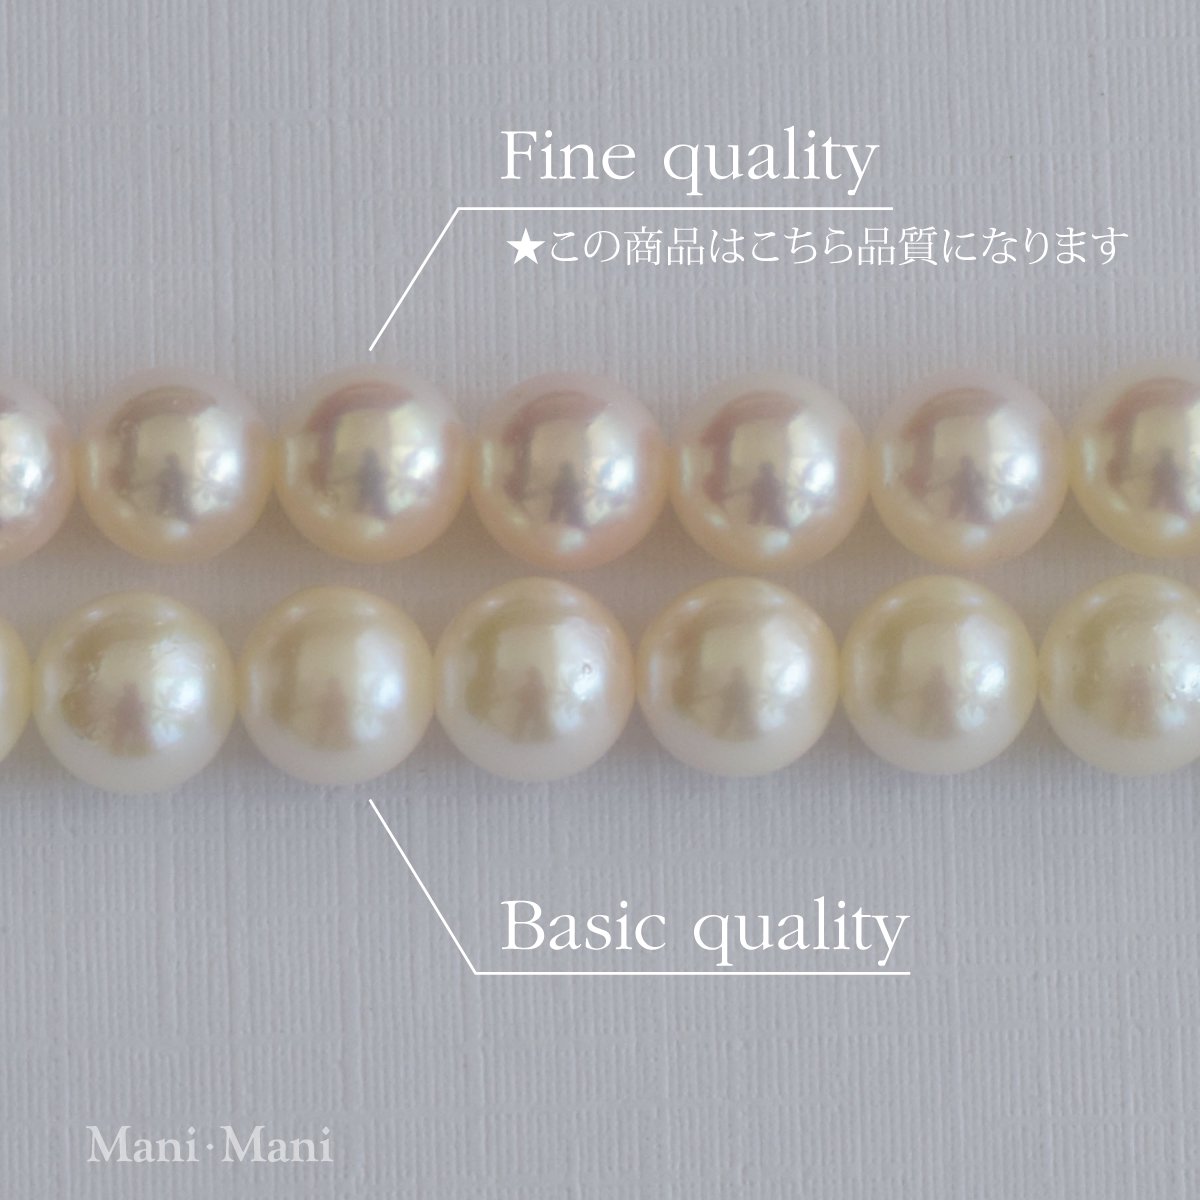 Fine quality》あこや真珠 ネックレス・ピアスセット 7.0－7.5mm